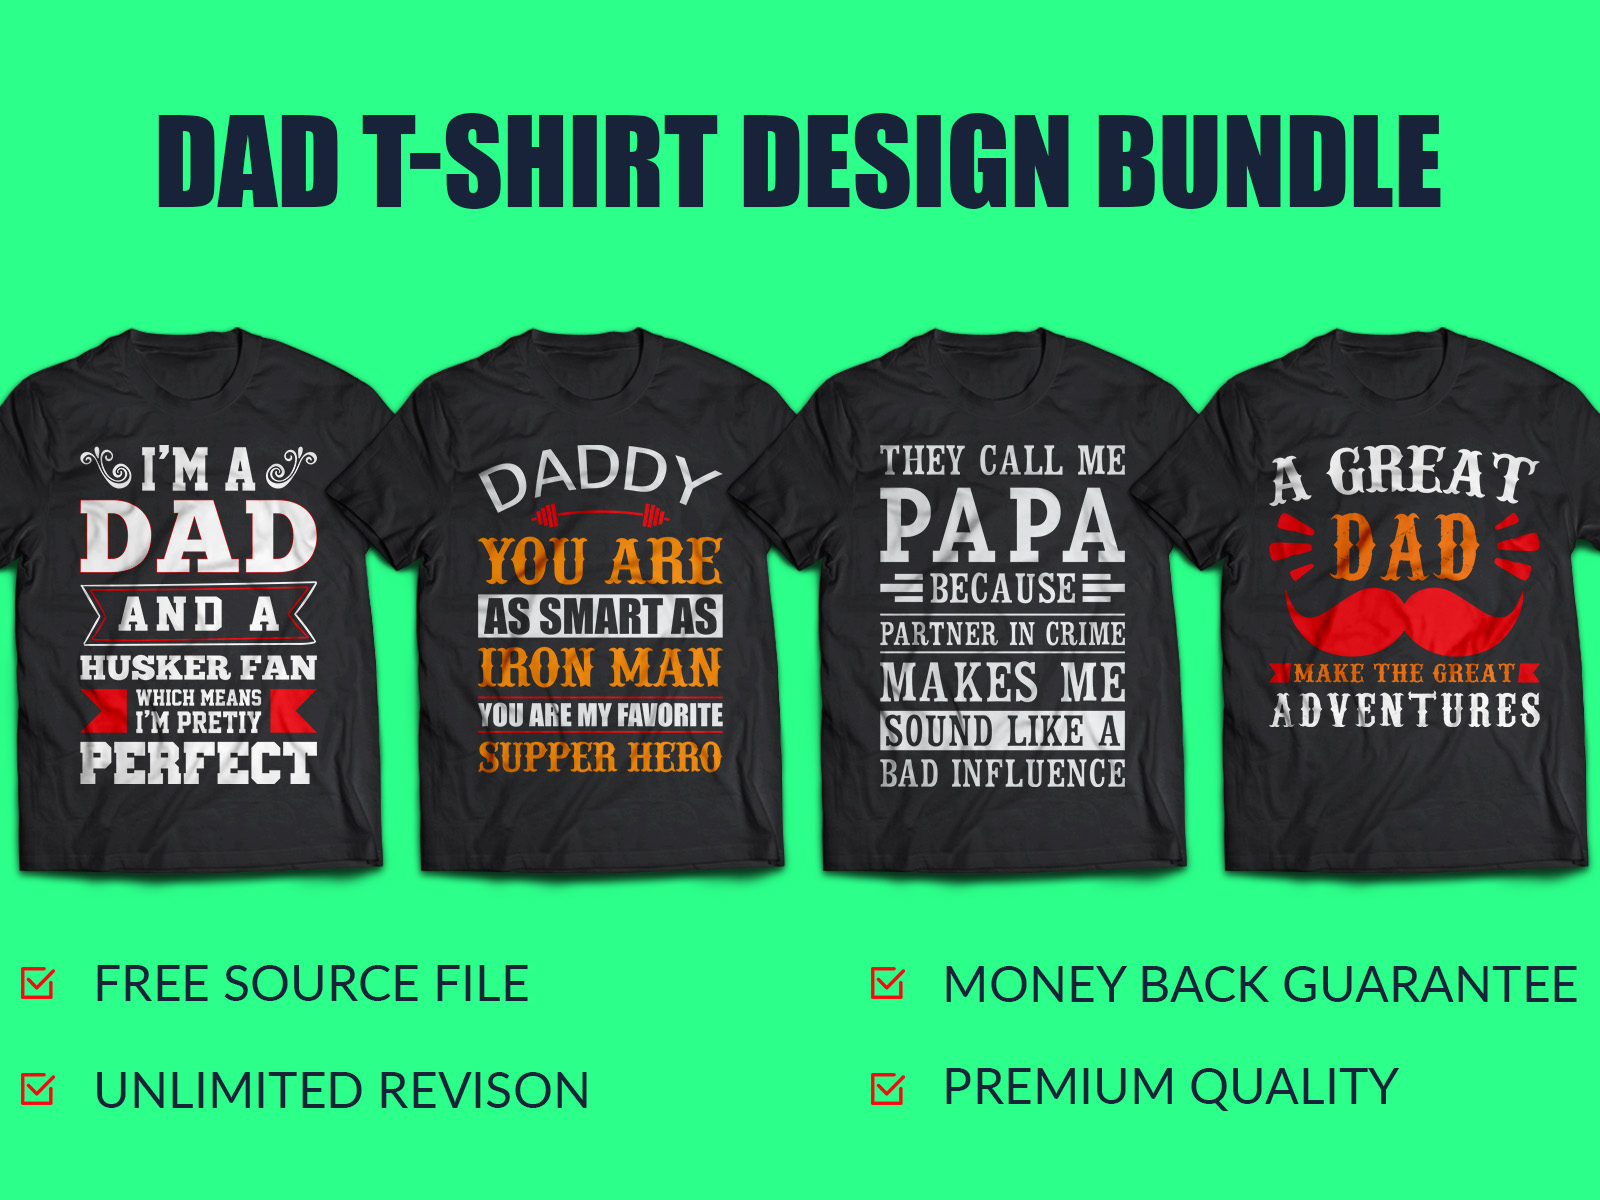 New Dad T-Shirt Design Bundle by Masud Rana on Dribbble